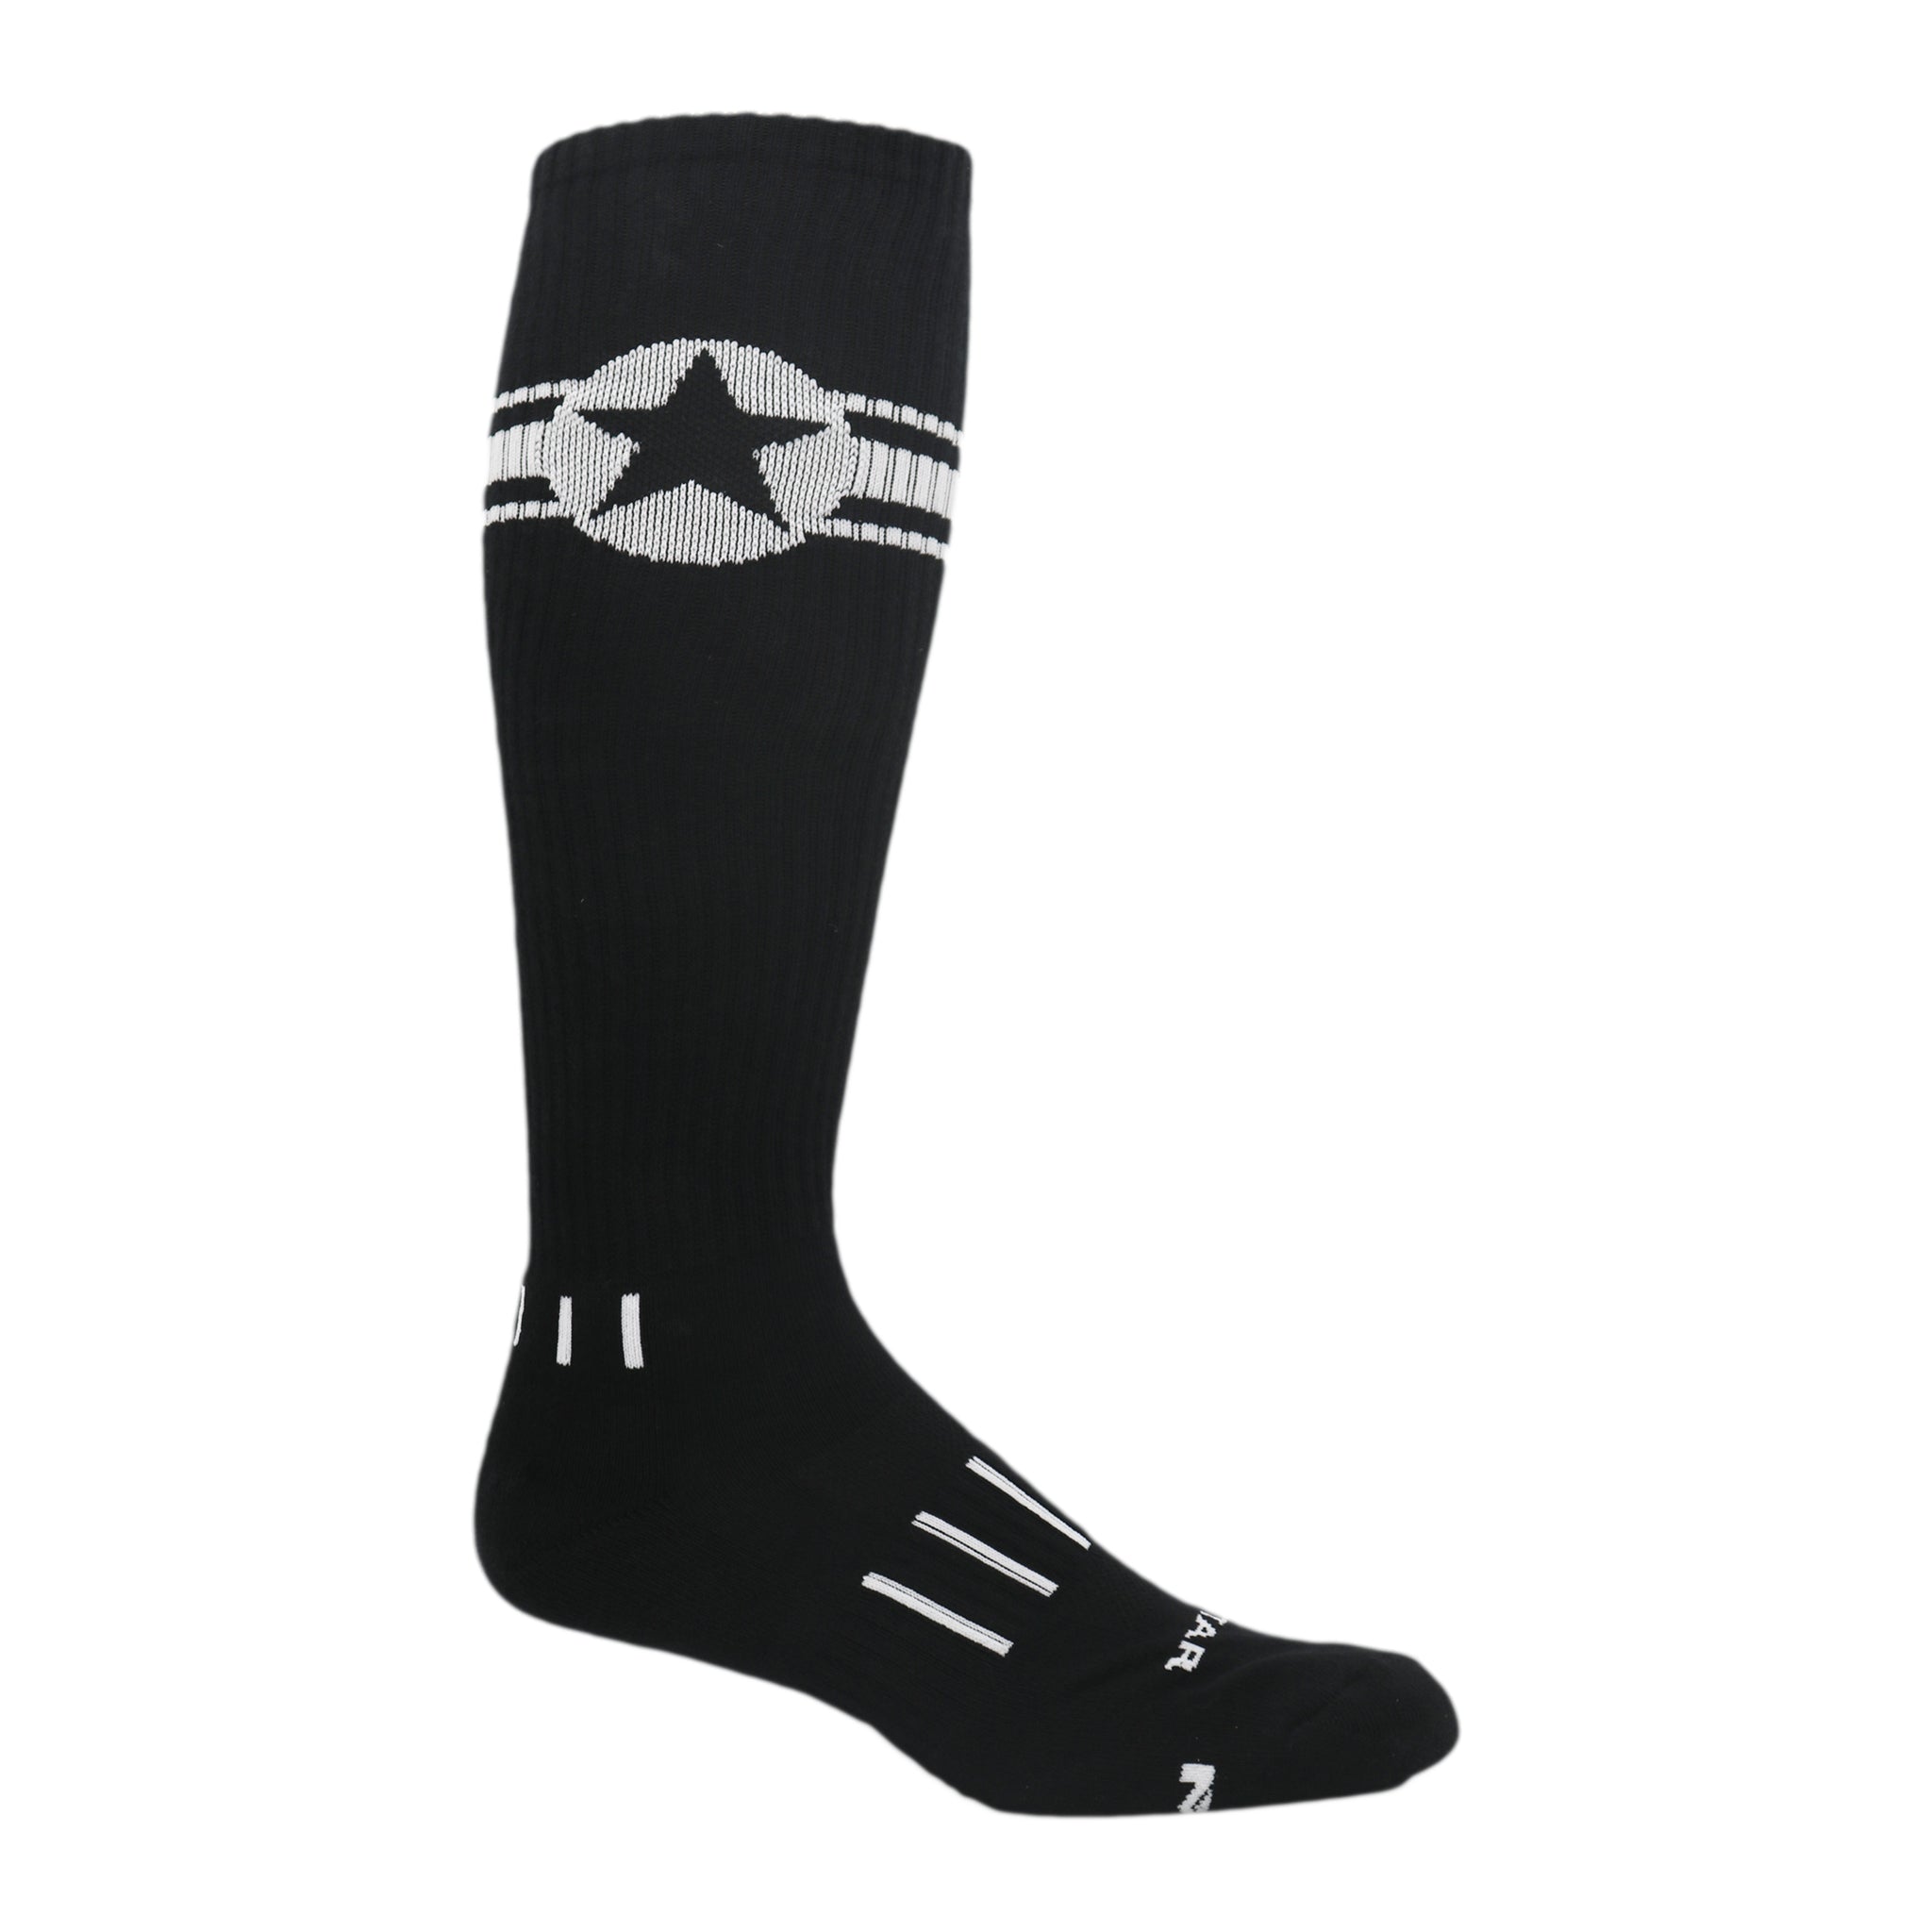 American Star Knee High Socks